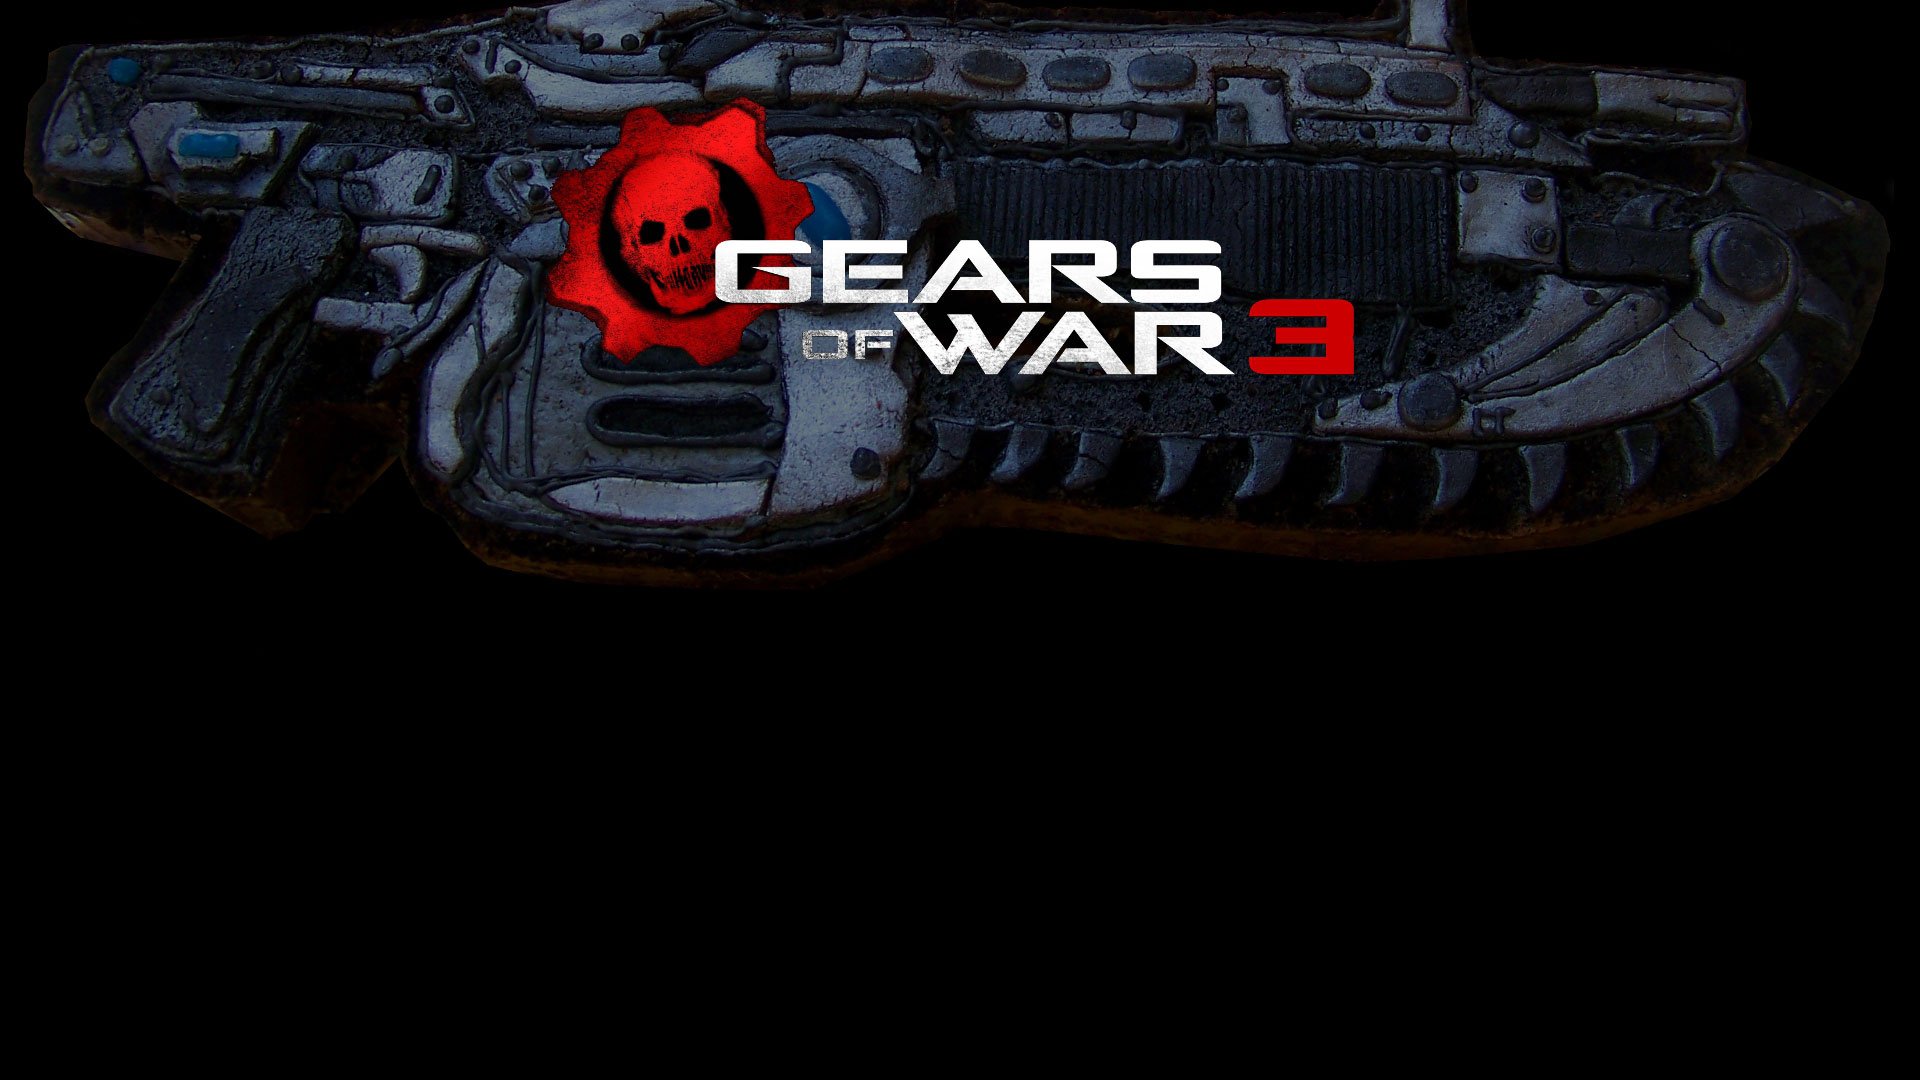 Gears of War 3 1080p Wallpaper Gears of War 3 720p Wallpaper